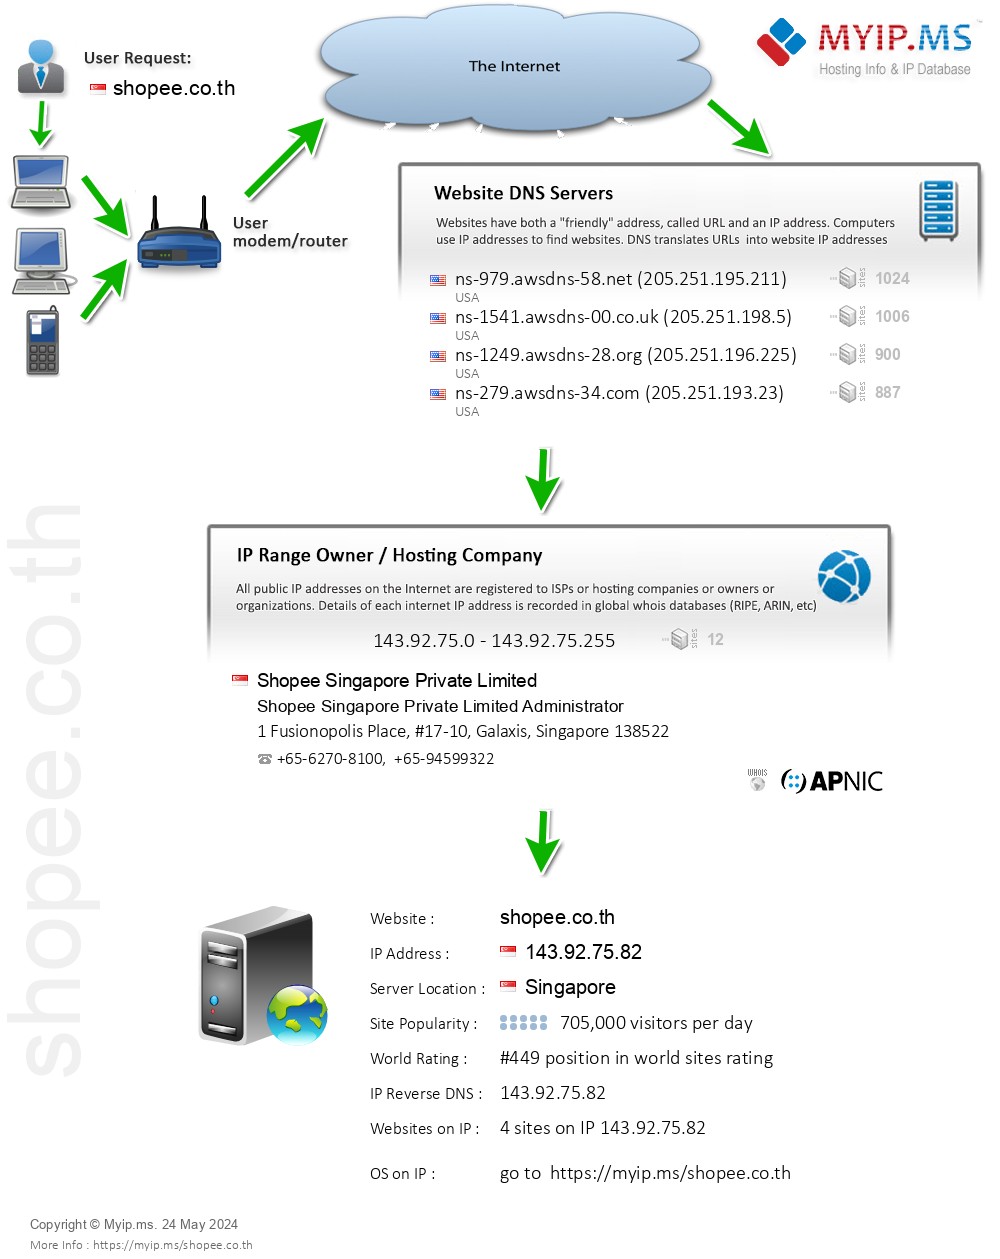 Shopee.co.th - Website Hosting Visual IP Diagram